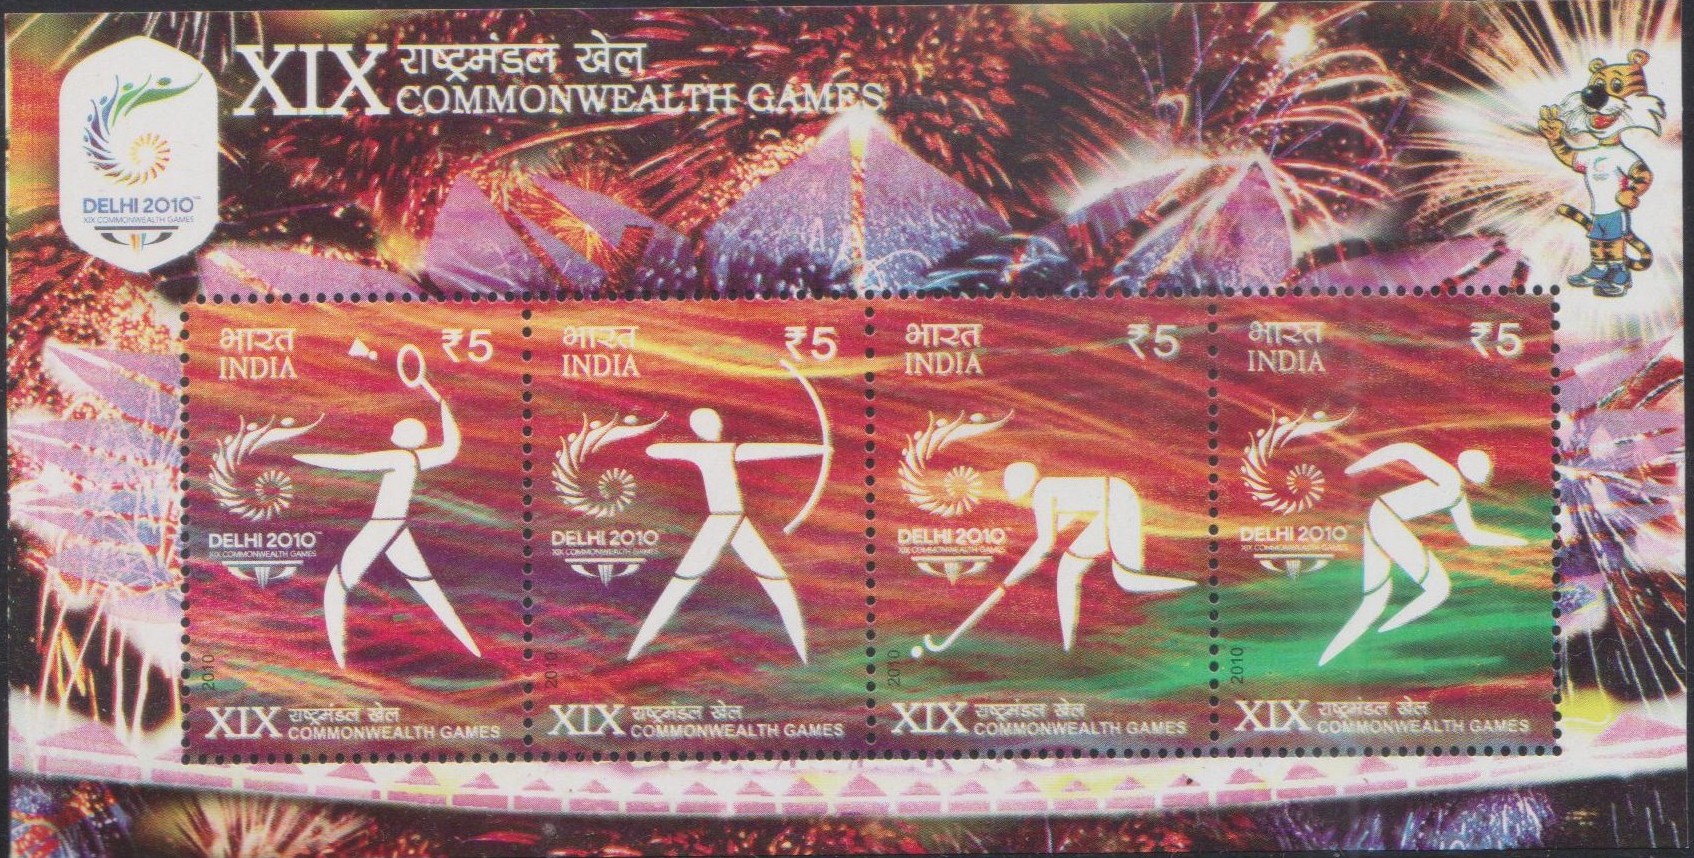  India on XIX Commonwealth Games, 2010